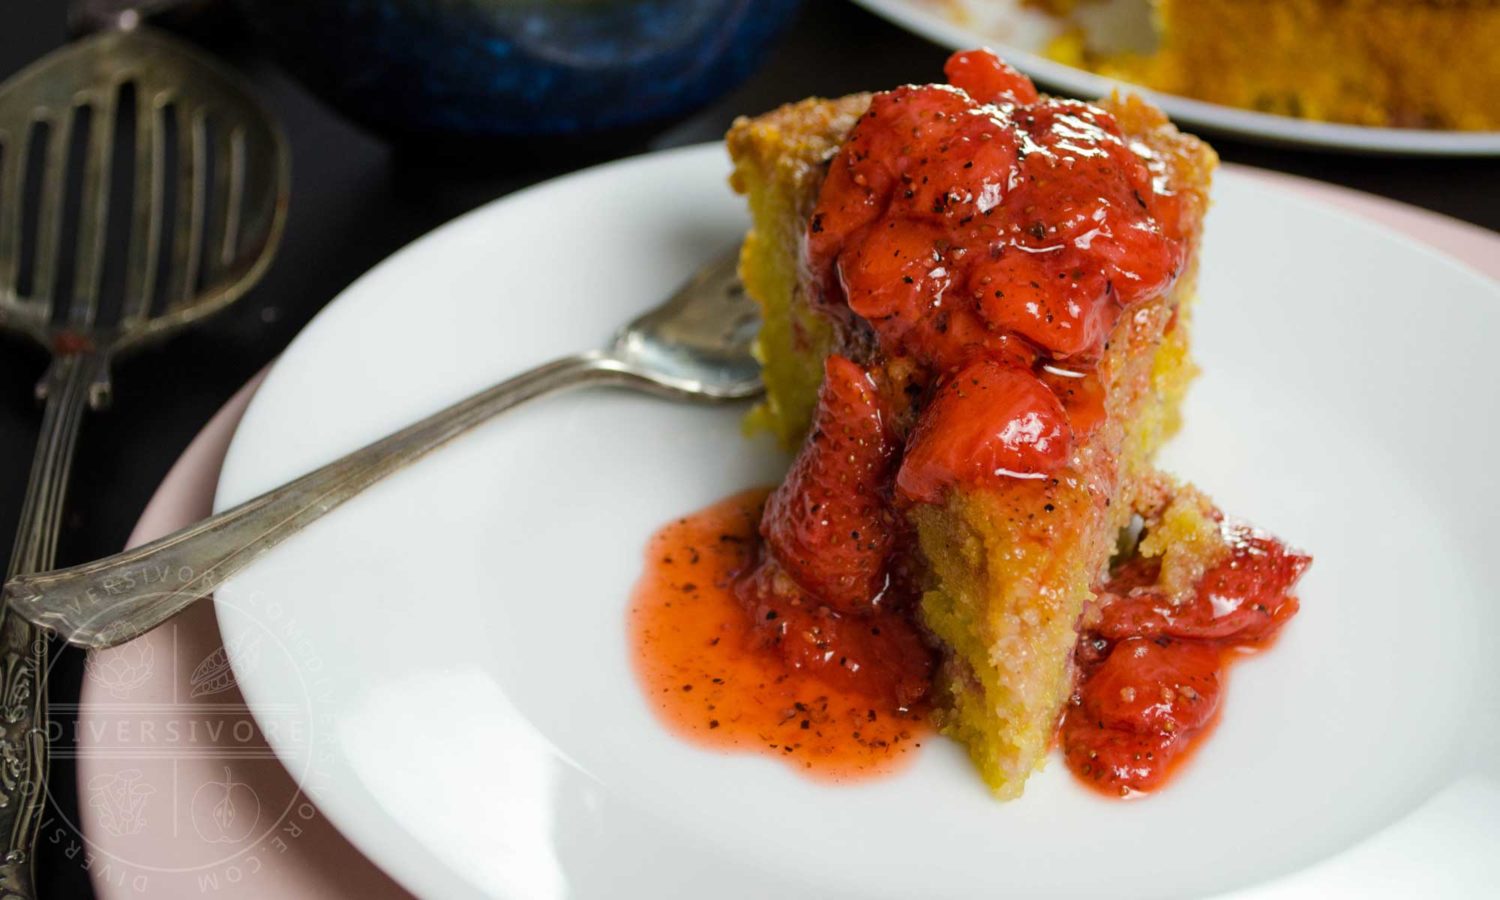 Strawberry and polenta (cornmeal) cake with almonds and lemon, topped with a strawberry and black pepper sauce - Diversivore.com